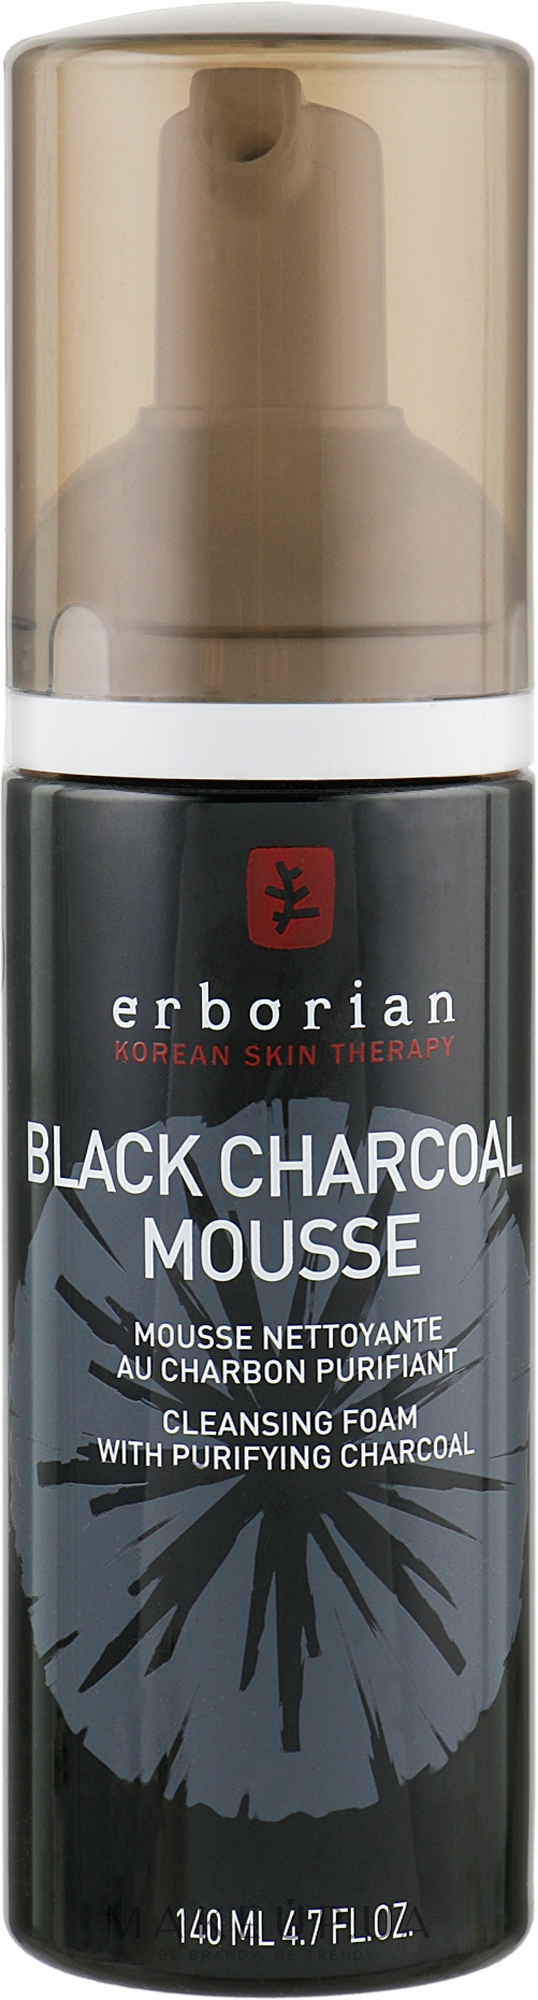 Пінка для очищення обличчя c деревним вугіллям - Erborian Black Charcoal Mouse Cleansing Foam With Purifying Charcoal — фото 140ml